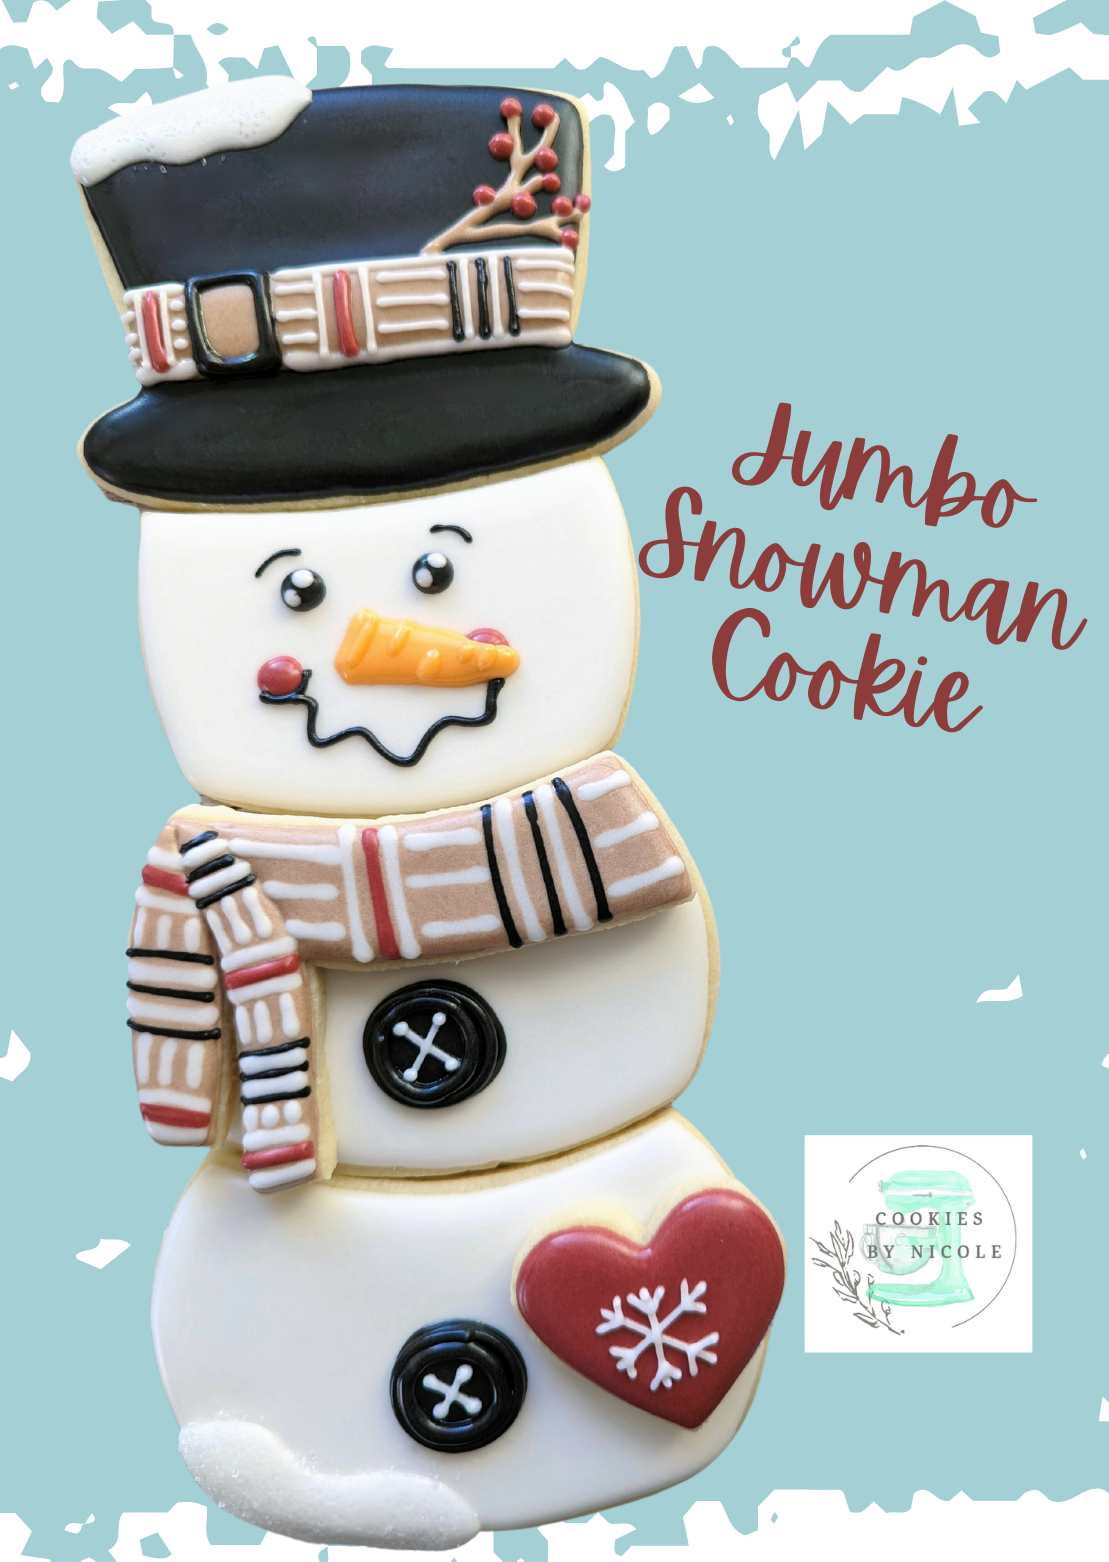 Royal Icing Cookie Decorating Class - Jumbo Snowman